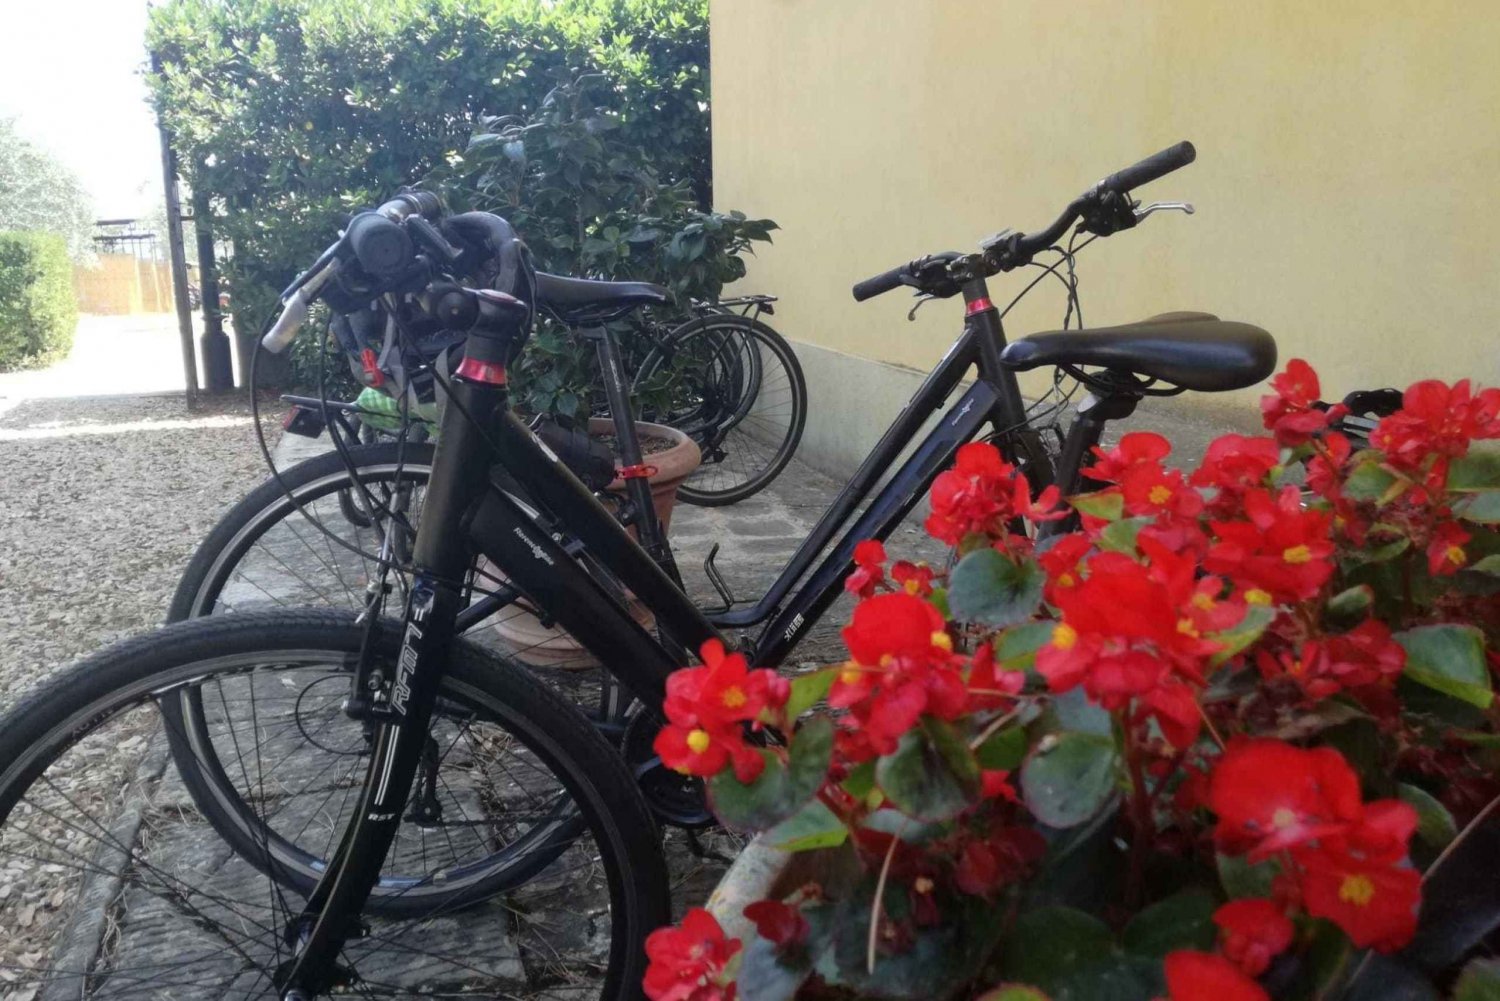 Touring bike rental to discover Tuscany